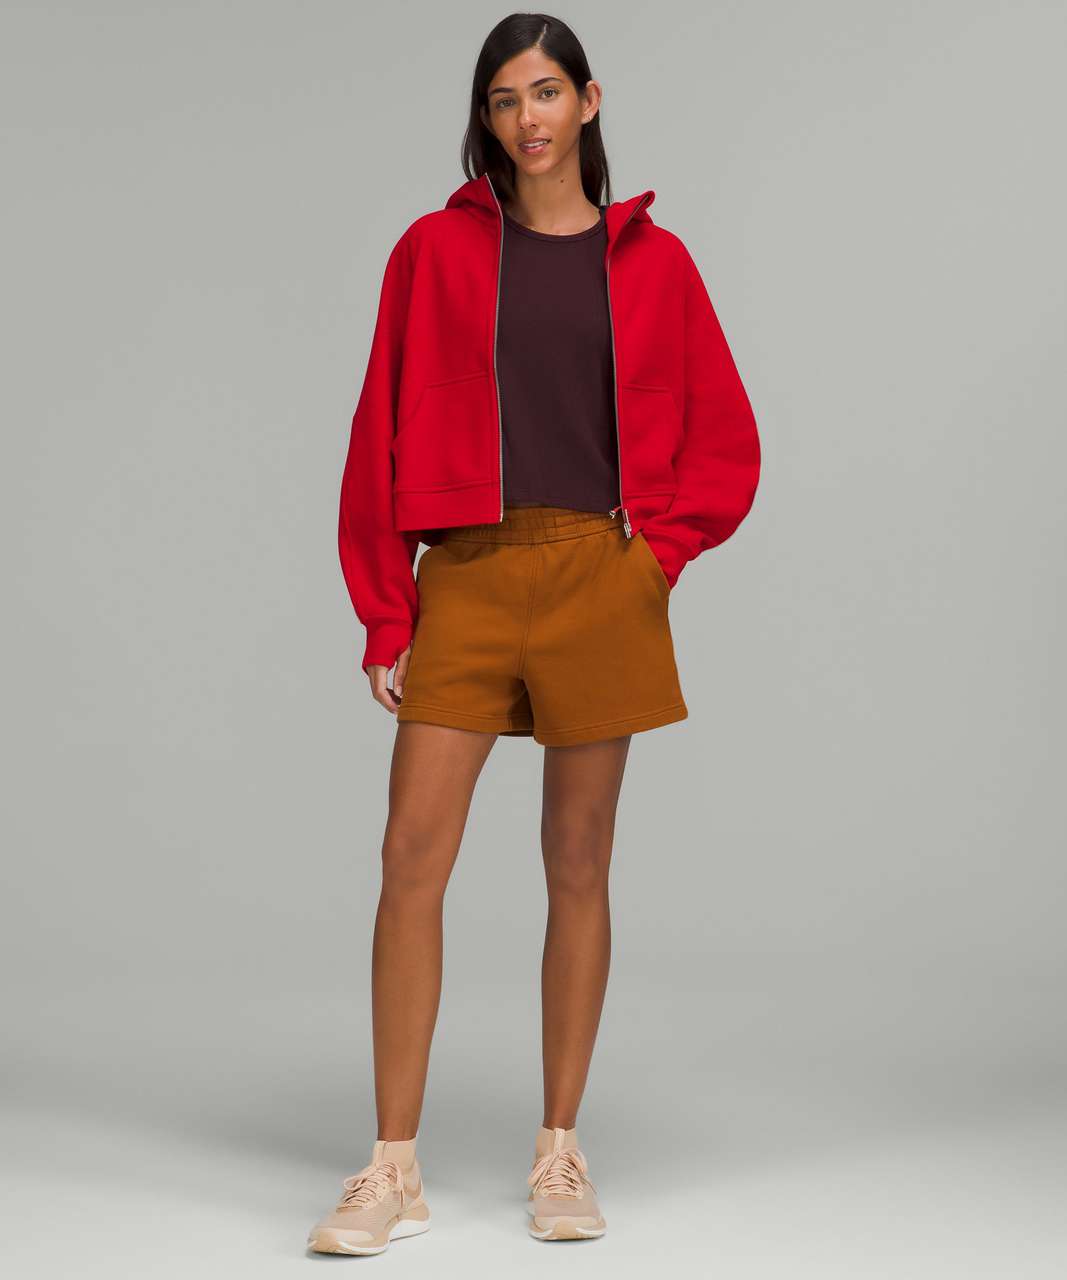 Lululemon Womens Scuba Sweatshirt Red Size 2/4? Good Used Condition